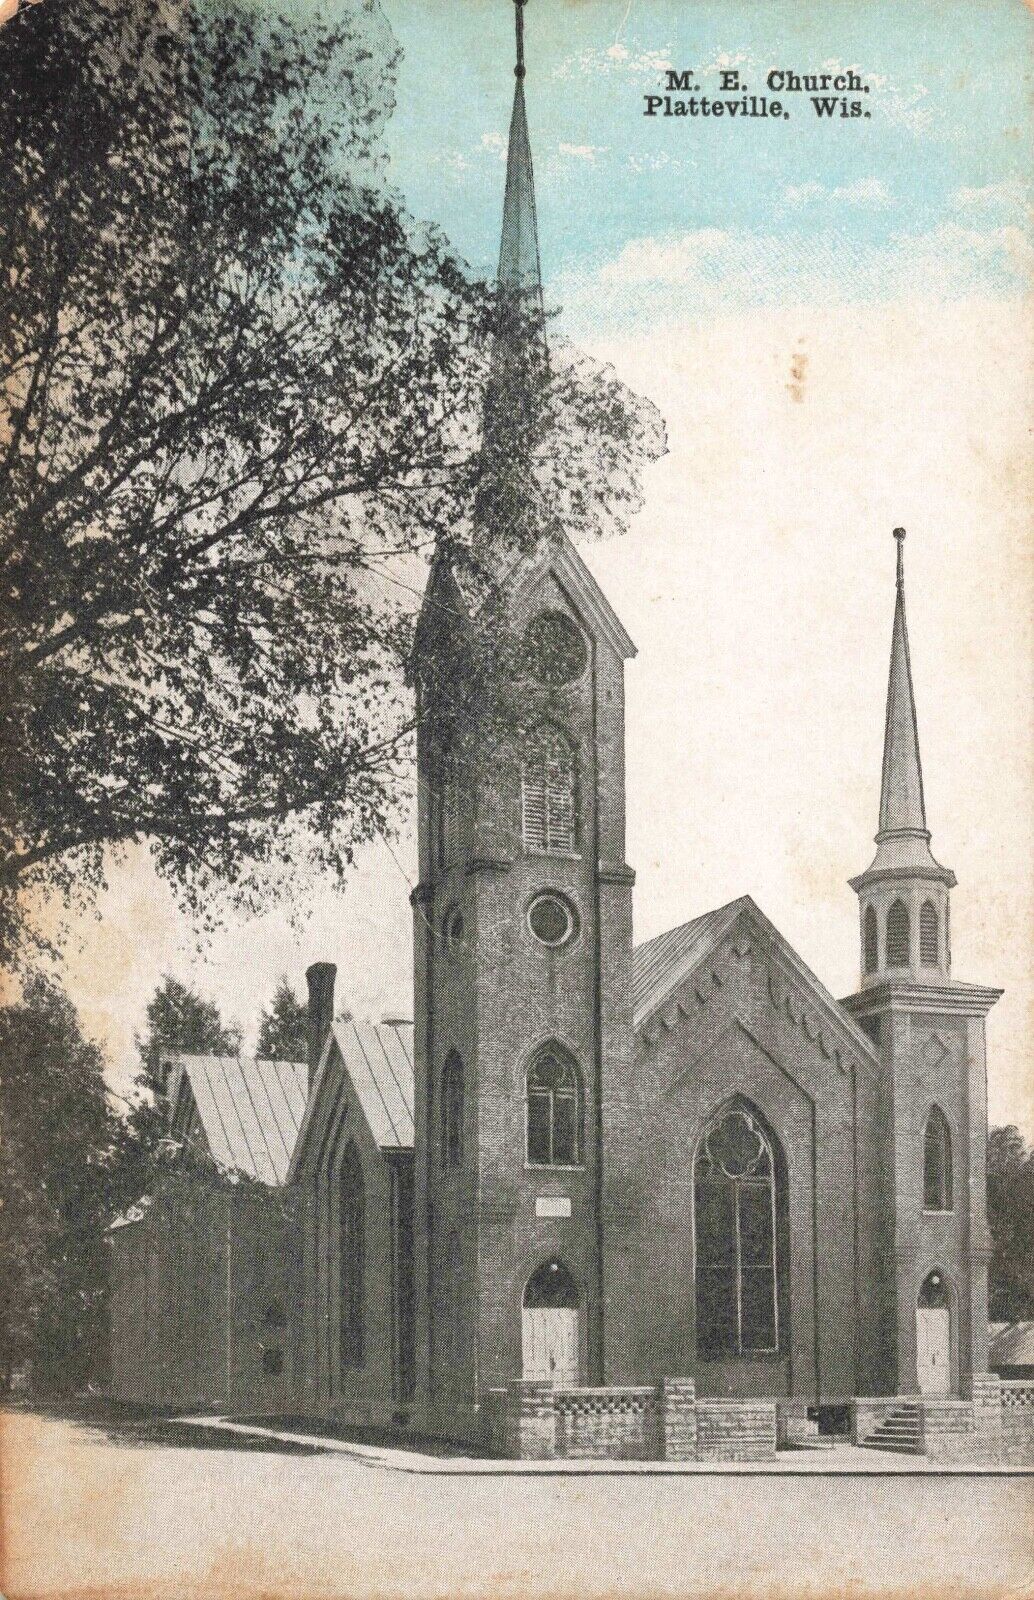 M. E. Church Platteville Wisconsin WI c1910 Postcard